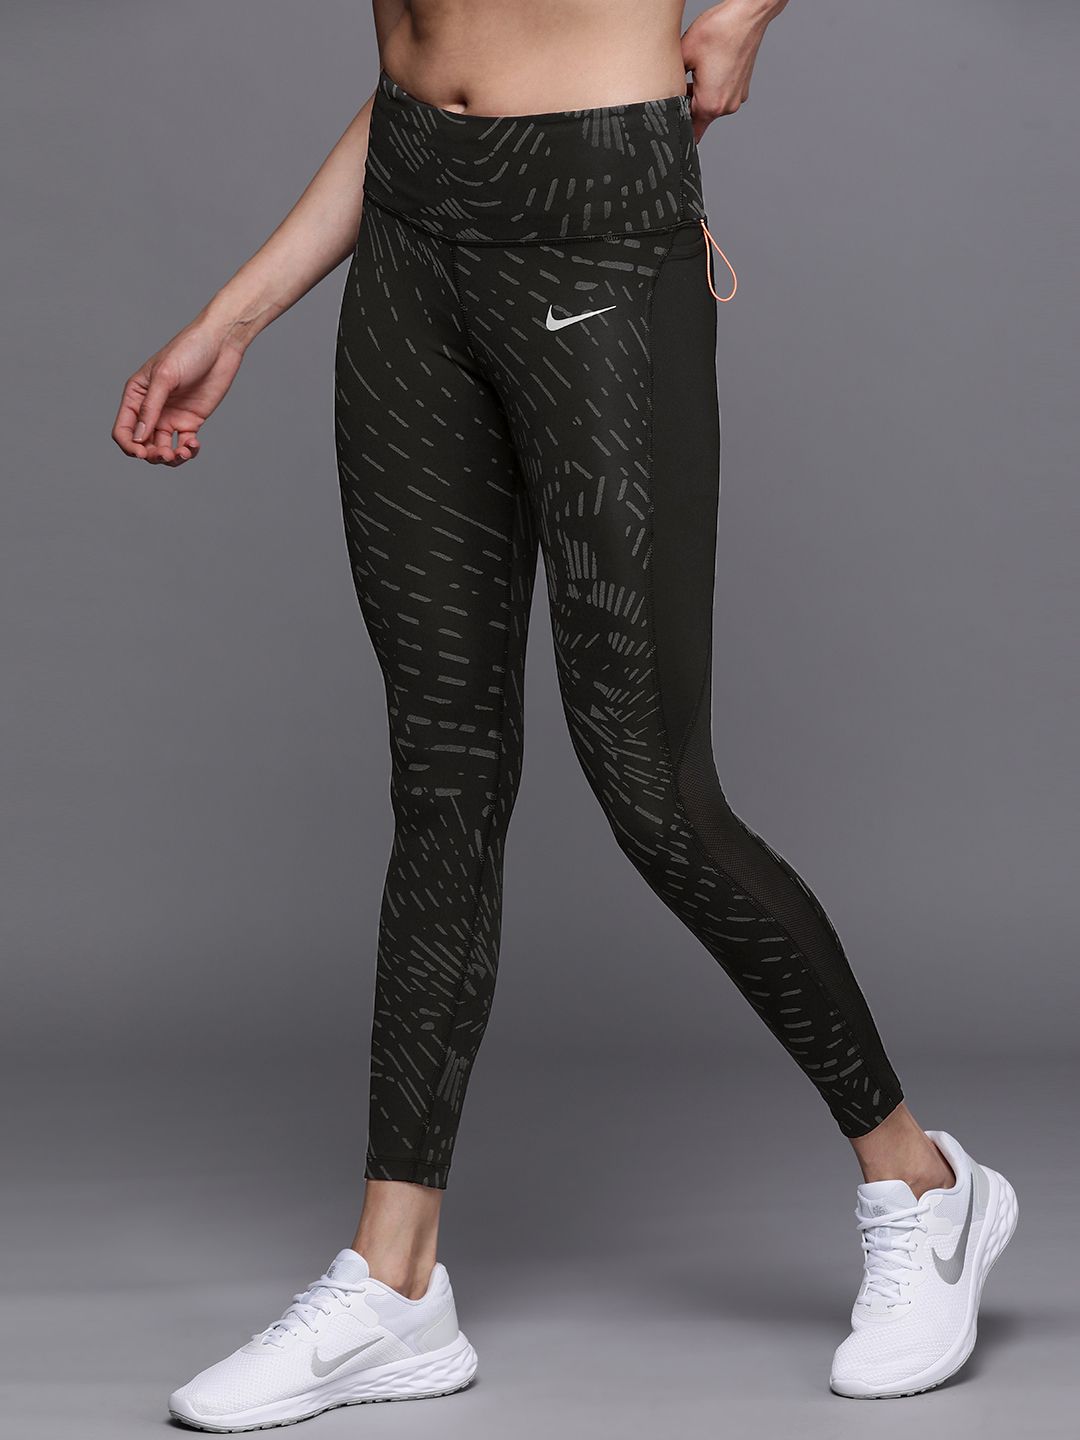 Nike Women Black Printed Dri-FIT Hig waist Running Tights Price in India